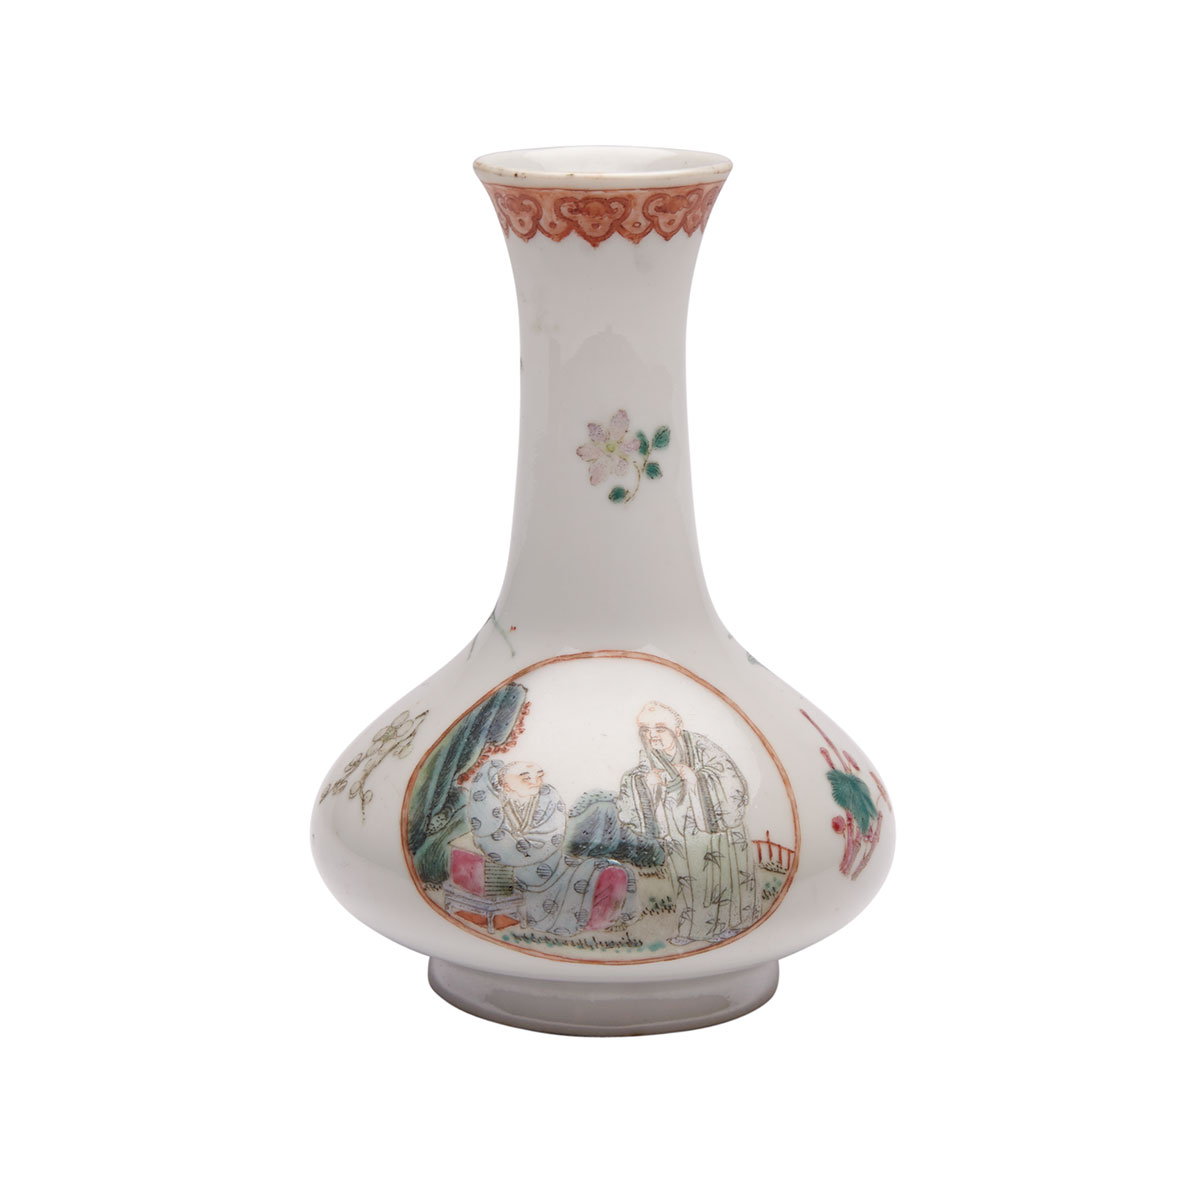 Famille Rose Miniature ‘Lohan’ Bottle Vase, Juren Tang Mark, Republican Period